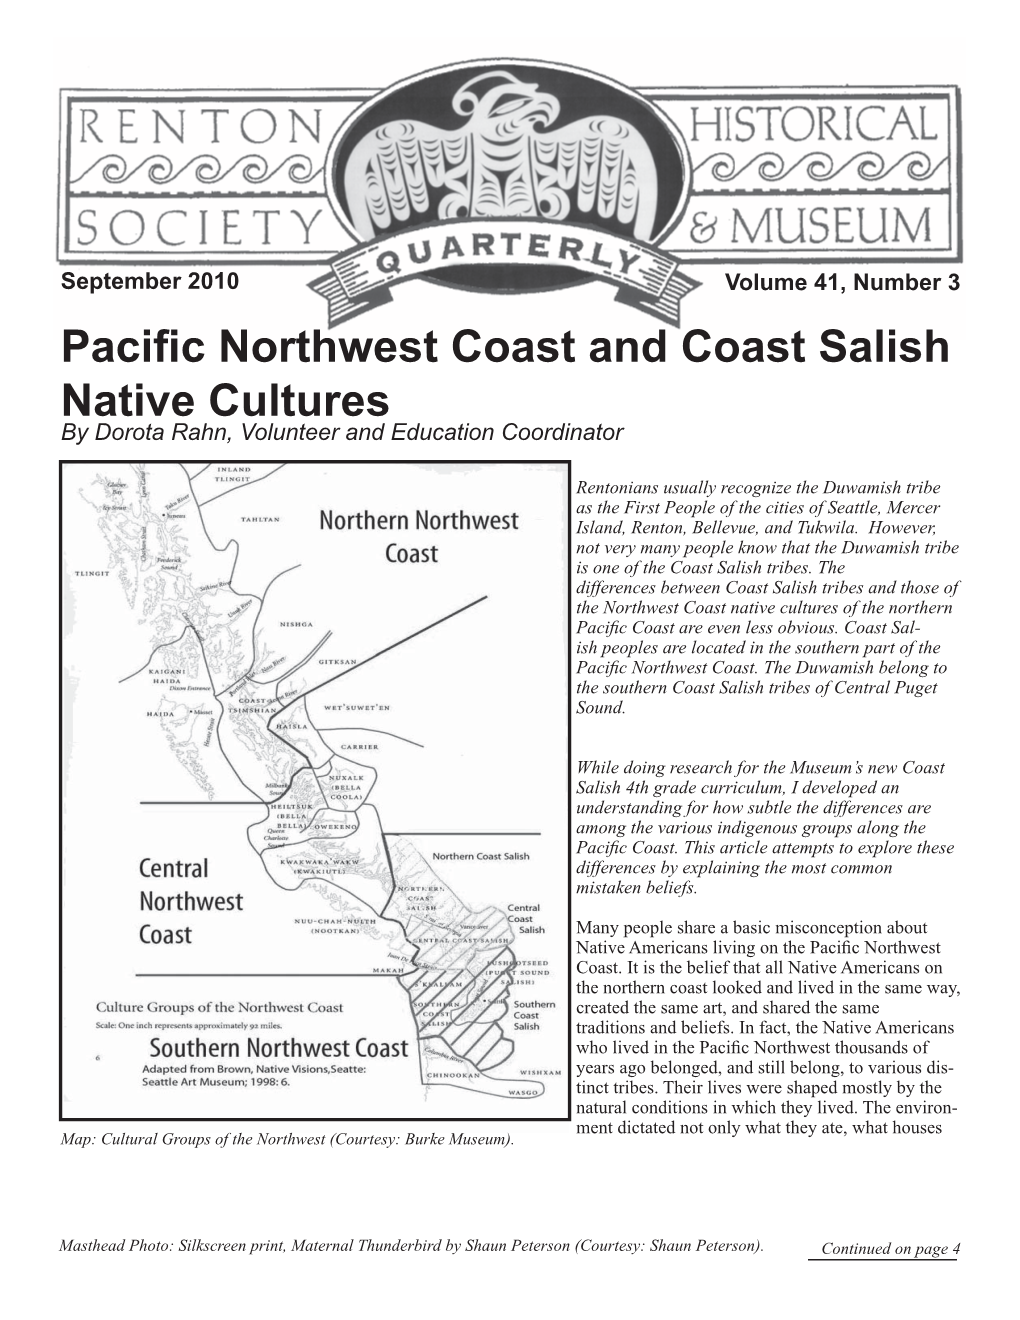 Pacific Northwest Coast and Coast Salish Native Cultures